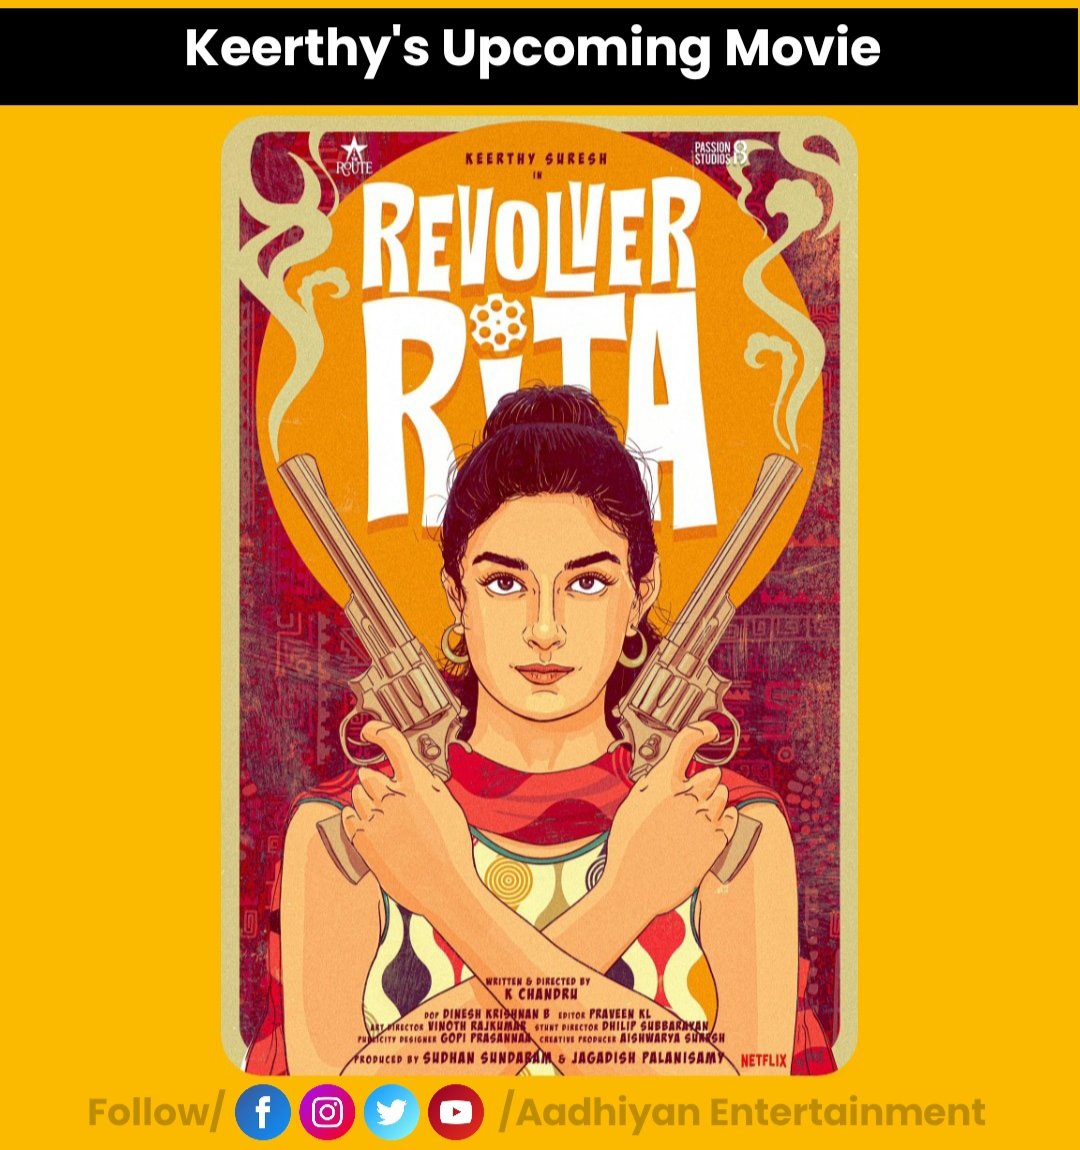 Keerthysuresh 's Upcoming Movie ❤️ Queen card 

#revolverrita #keerthysuresh  #upcomingmovies